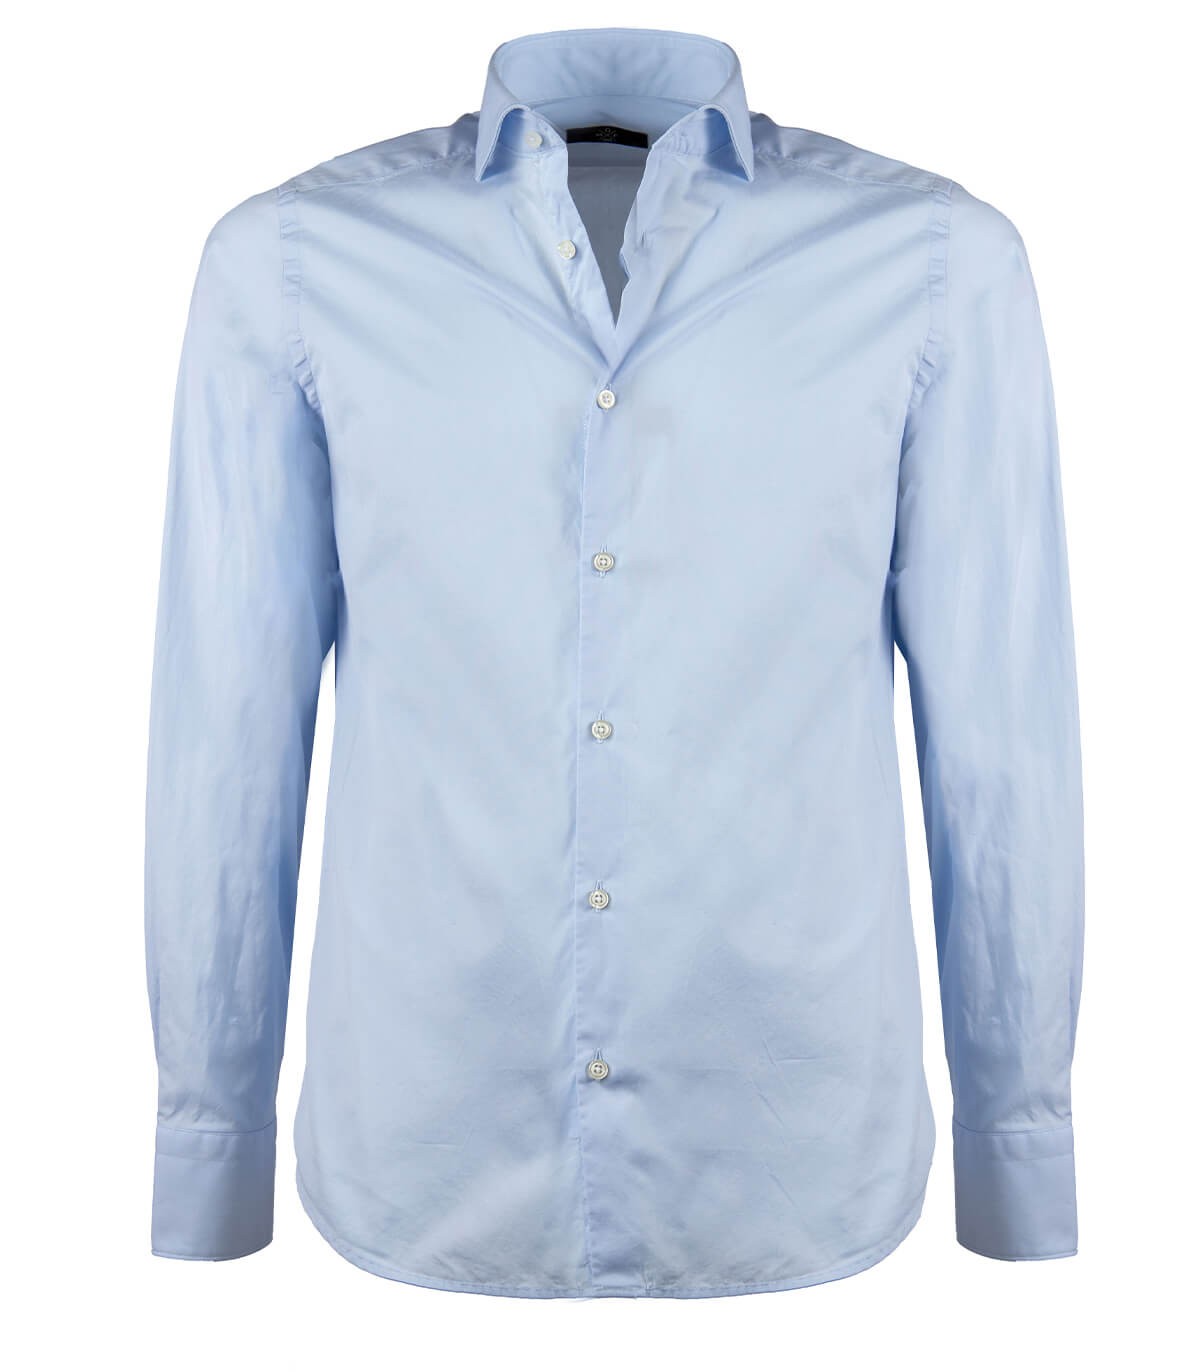 Gmf 965 Light Blue Cotton Shirt